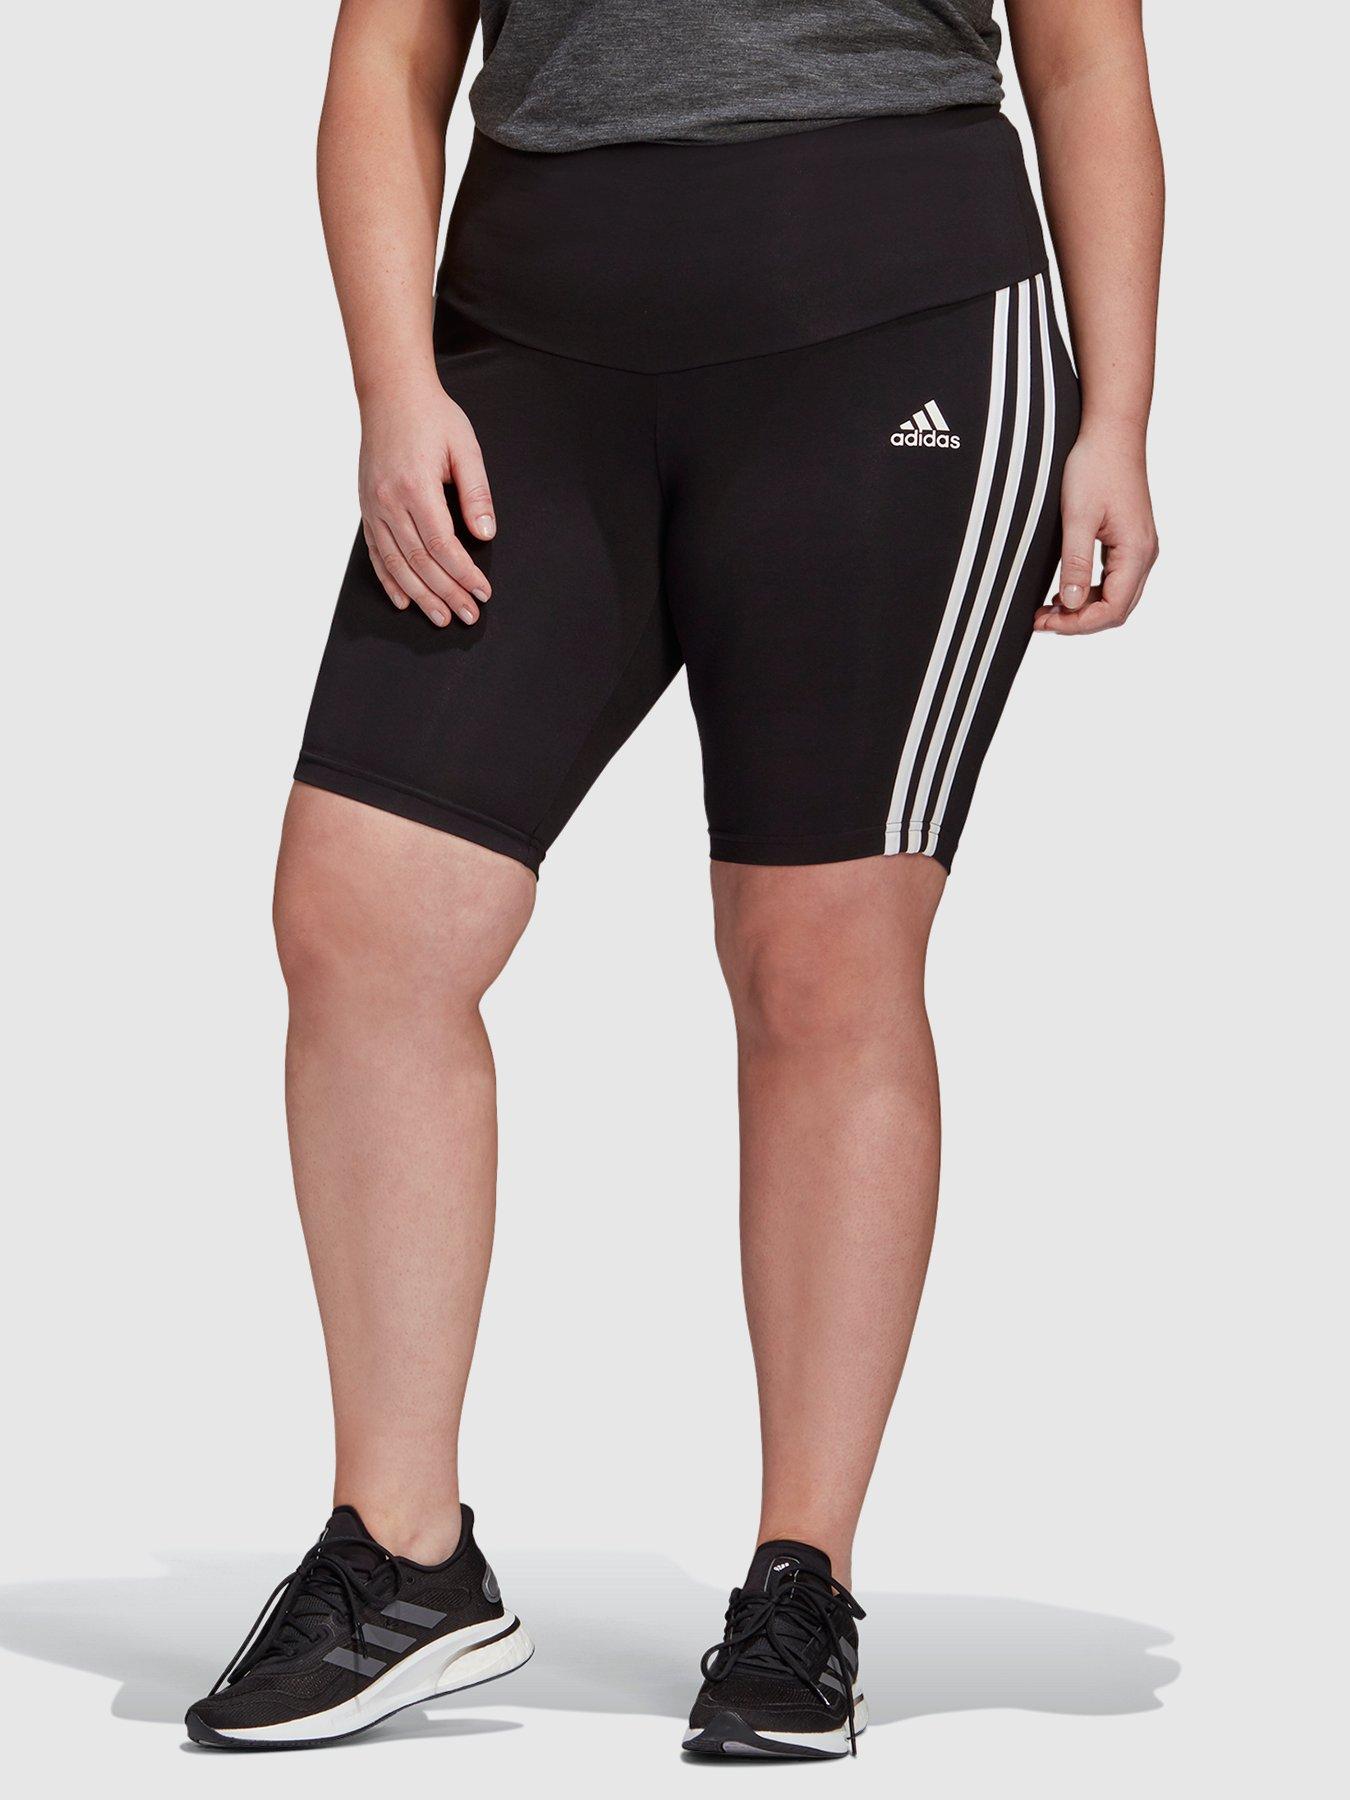 adidas biker shorts plus size